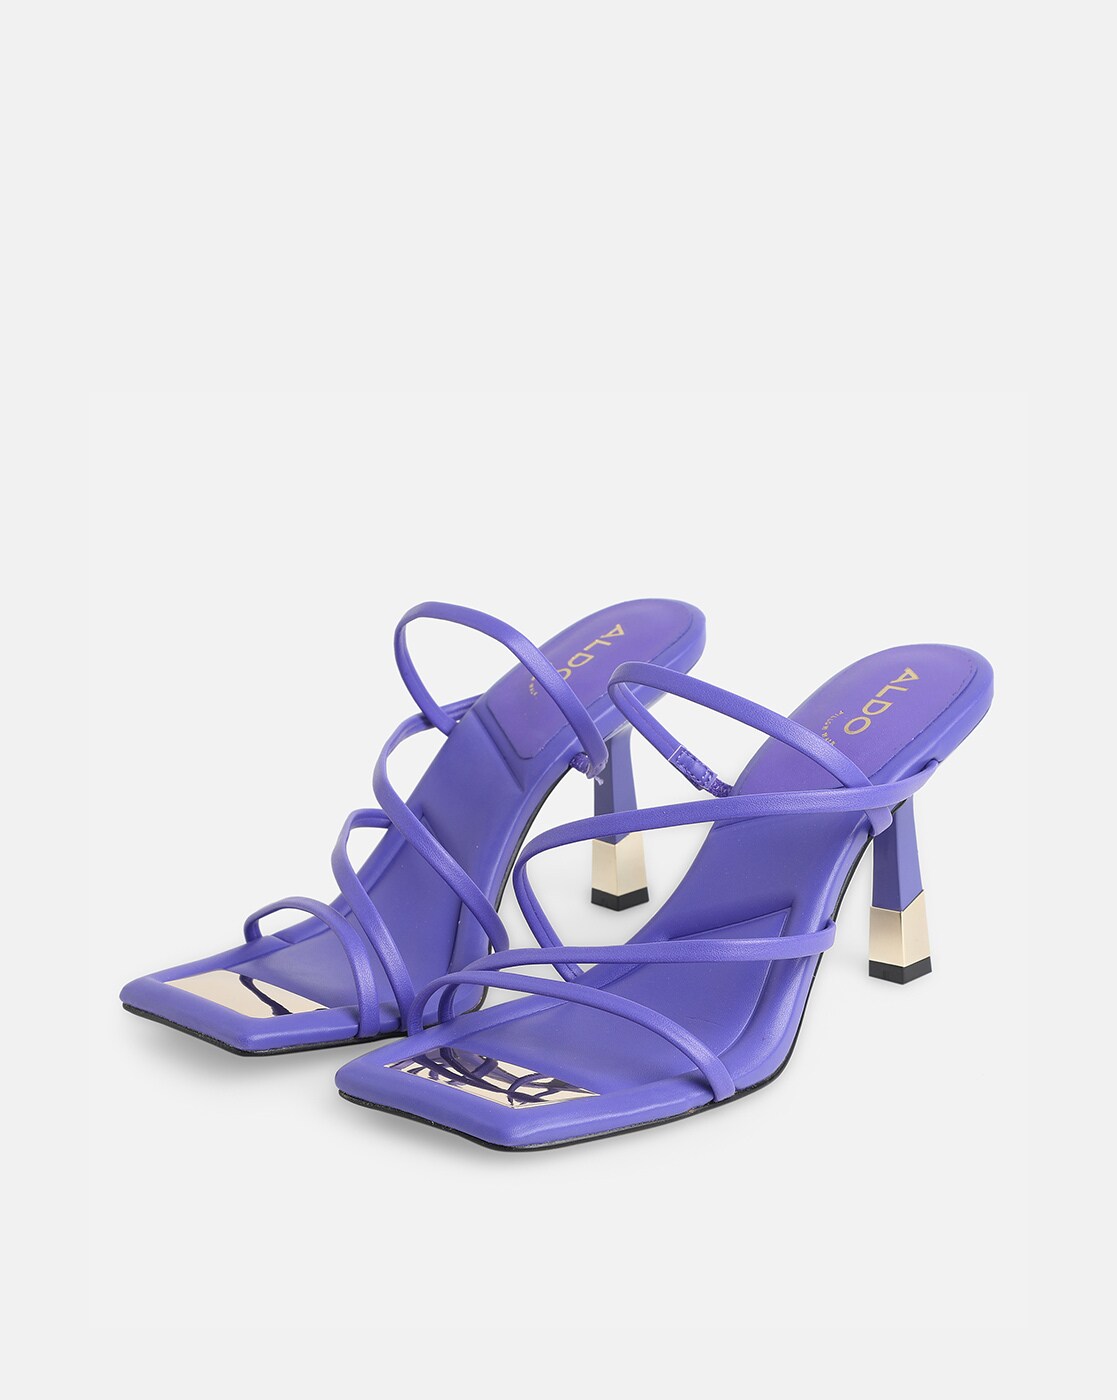 Buy PURPLE Heeled Sandals by Online | Ajio.com